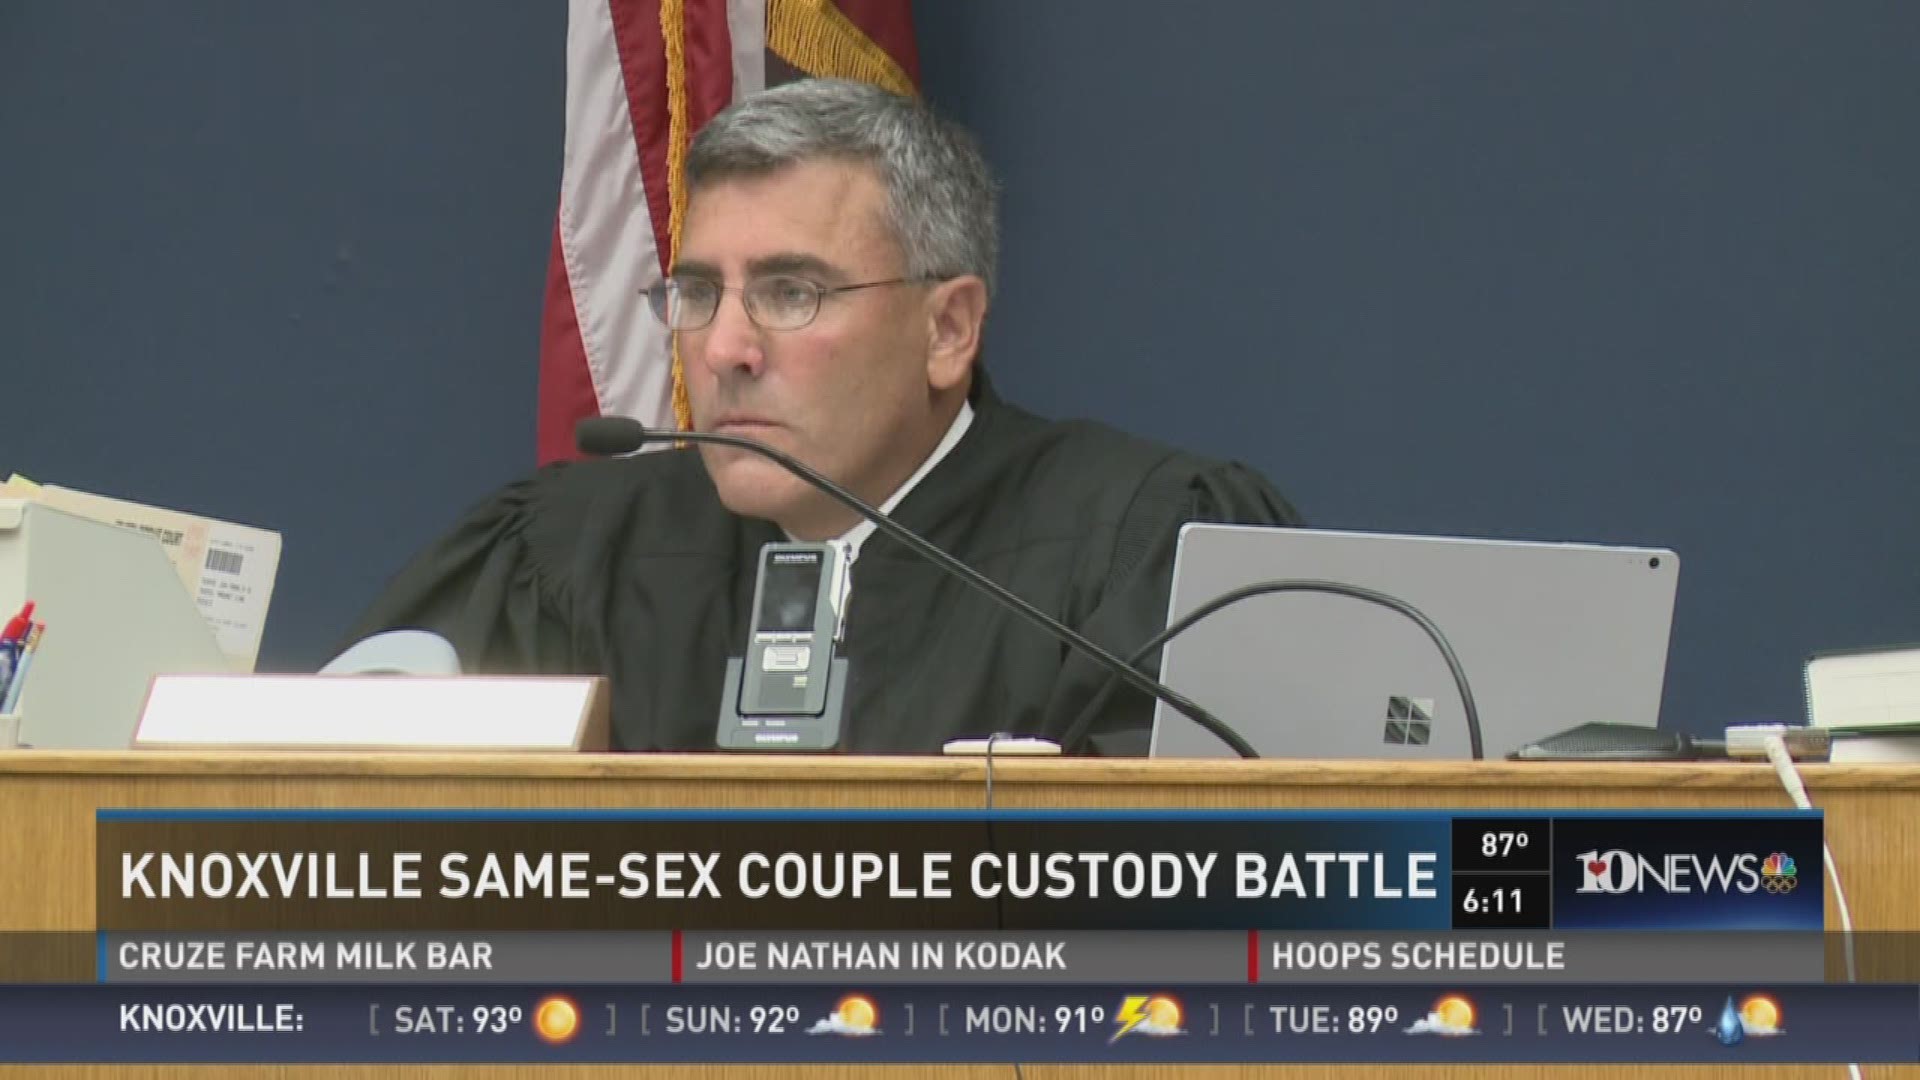 Same Sex Divorce Custody Battle Could Set Precedent In Tn 